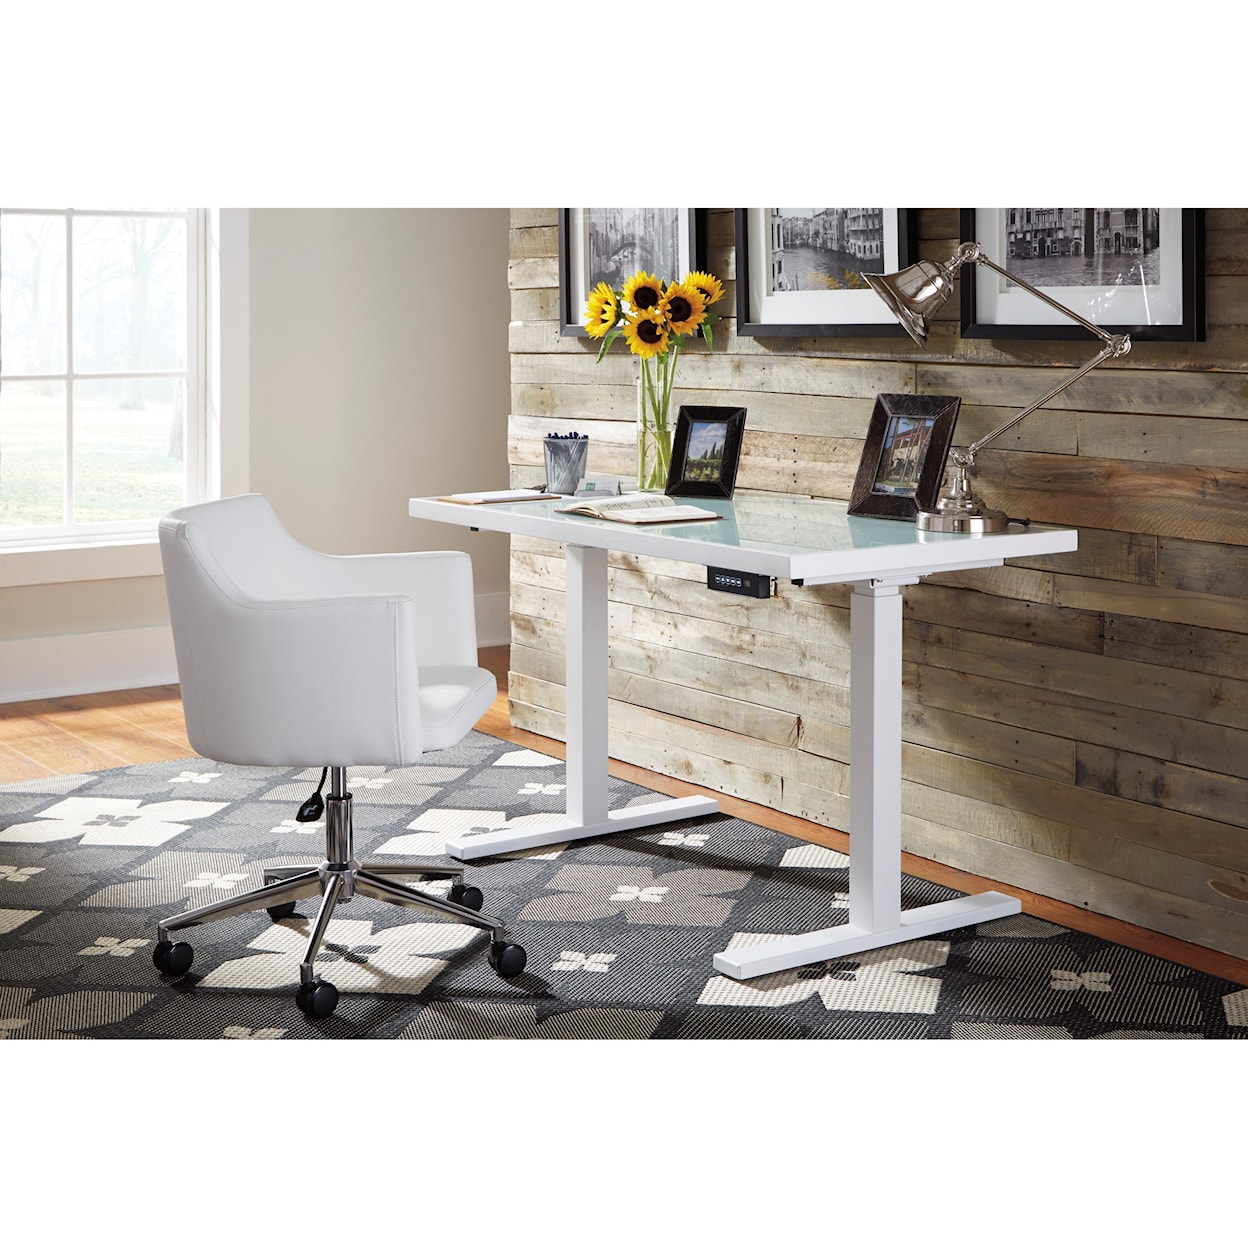 Ashley Furniture Signature Design Baraga Home Office Swivel Desk Chair